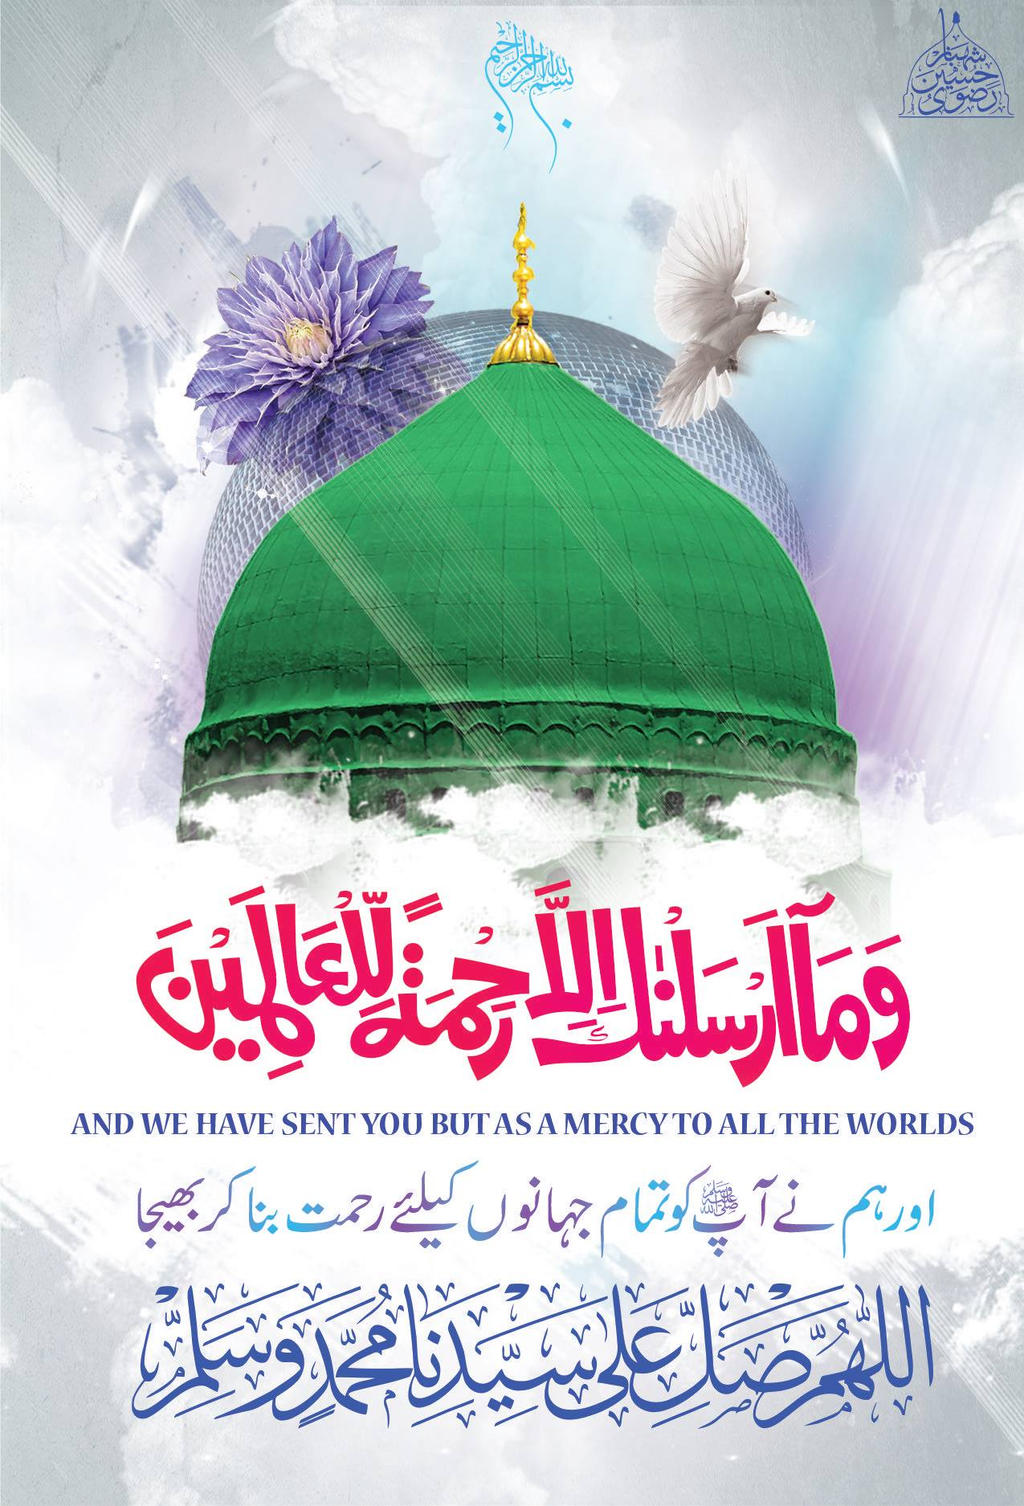 Islamic Poster HD by SHAHBAZRAZVI on DeviantArt